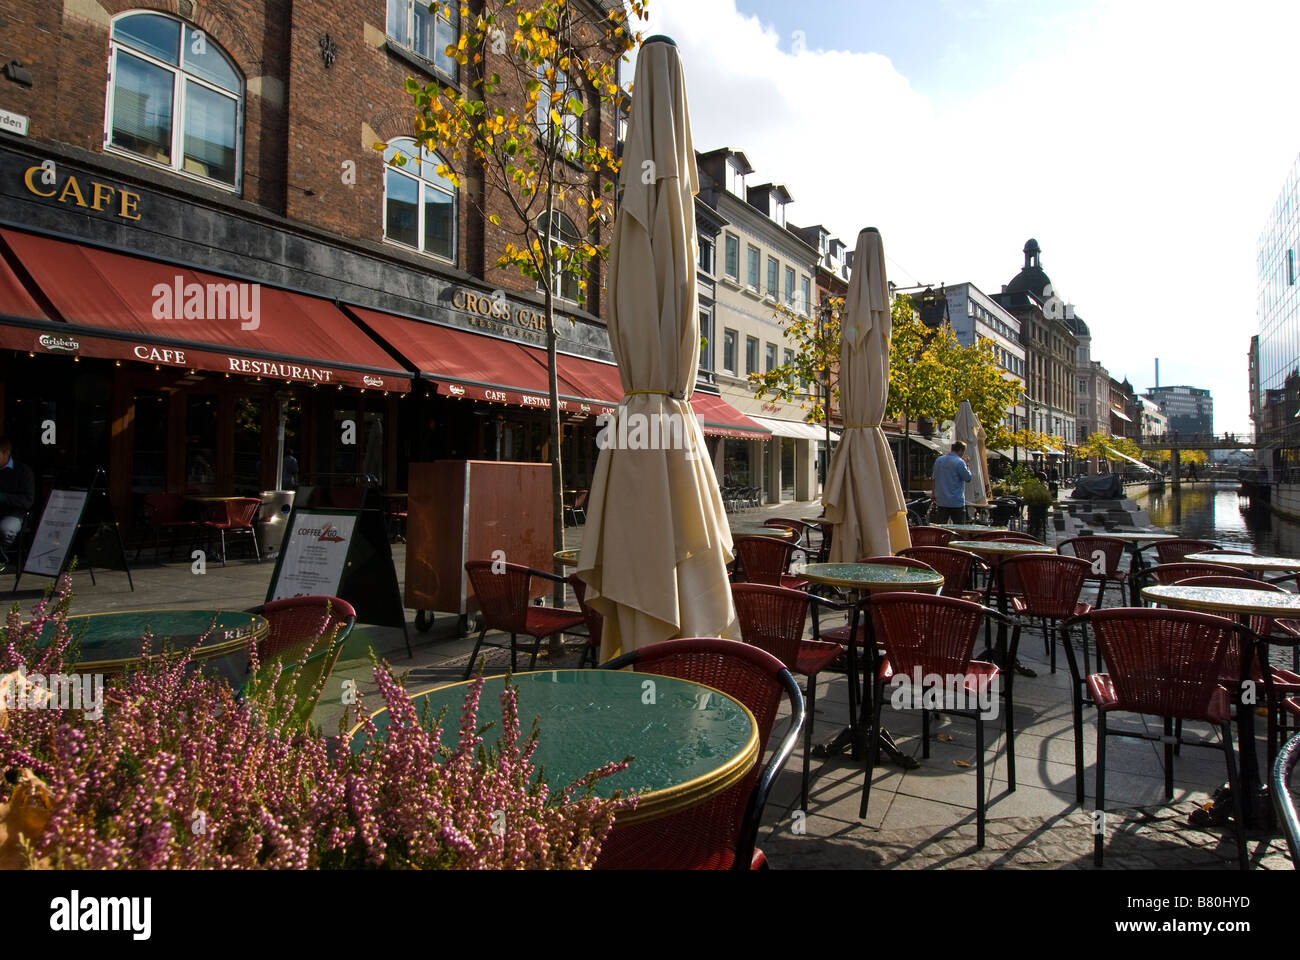 A deserted cafe on Aboulevarden Arhus Denmark Stock Photo